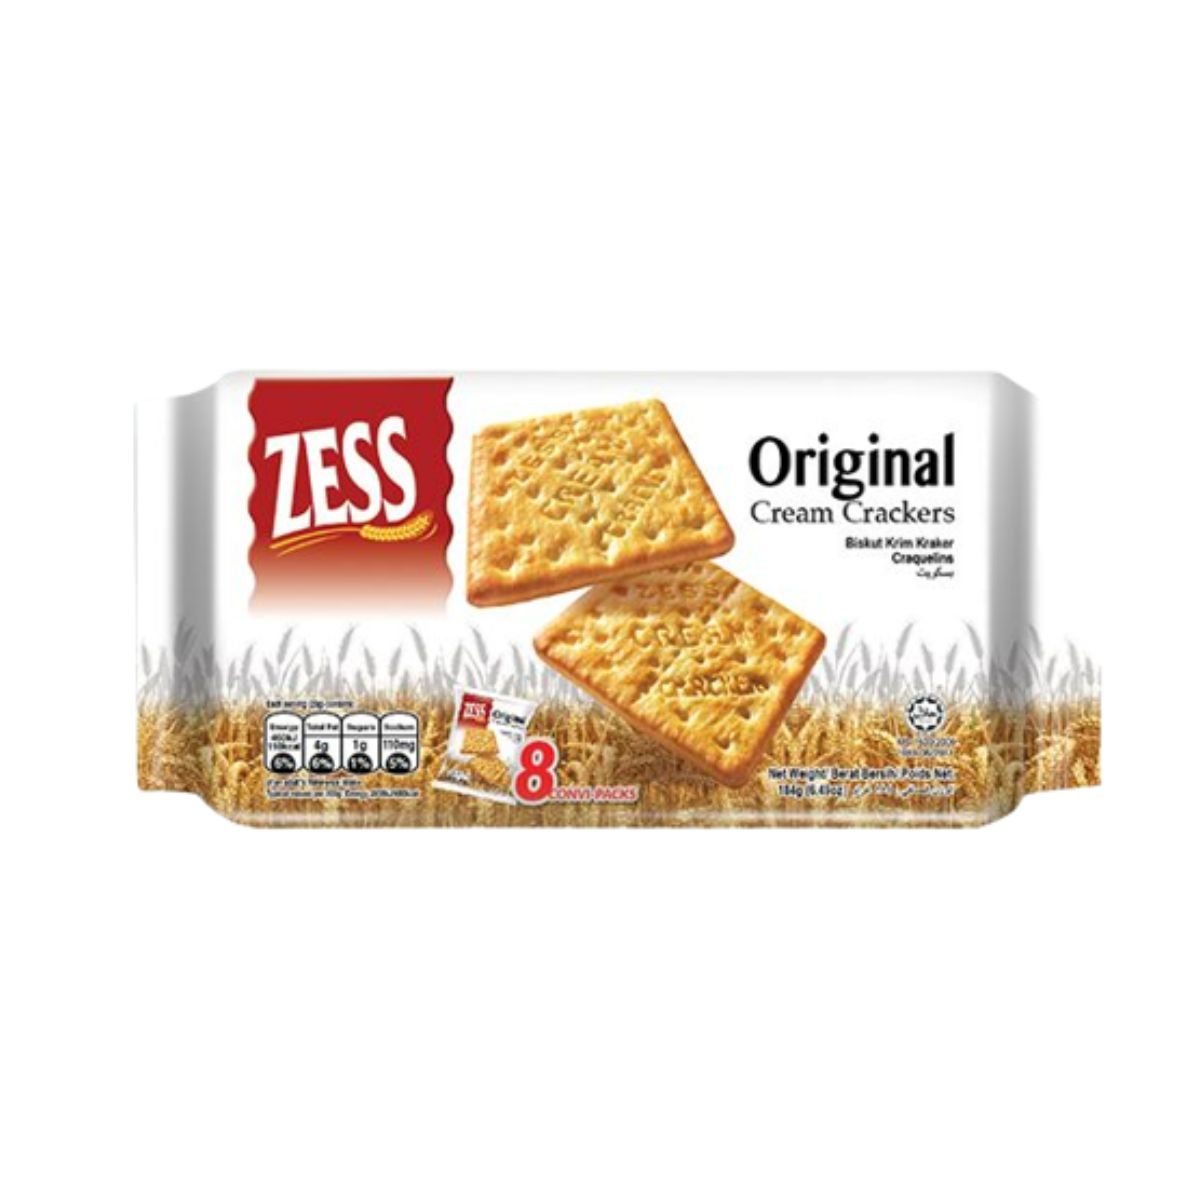 Zess Original Cream Cracker - 180g